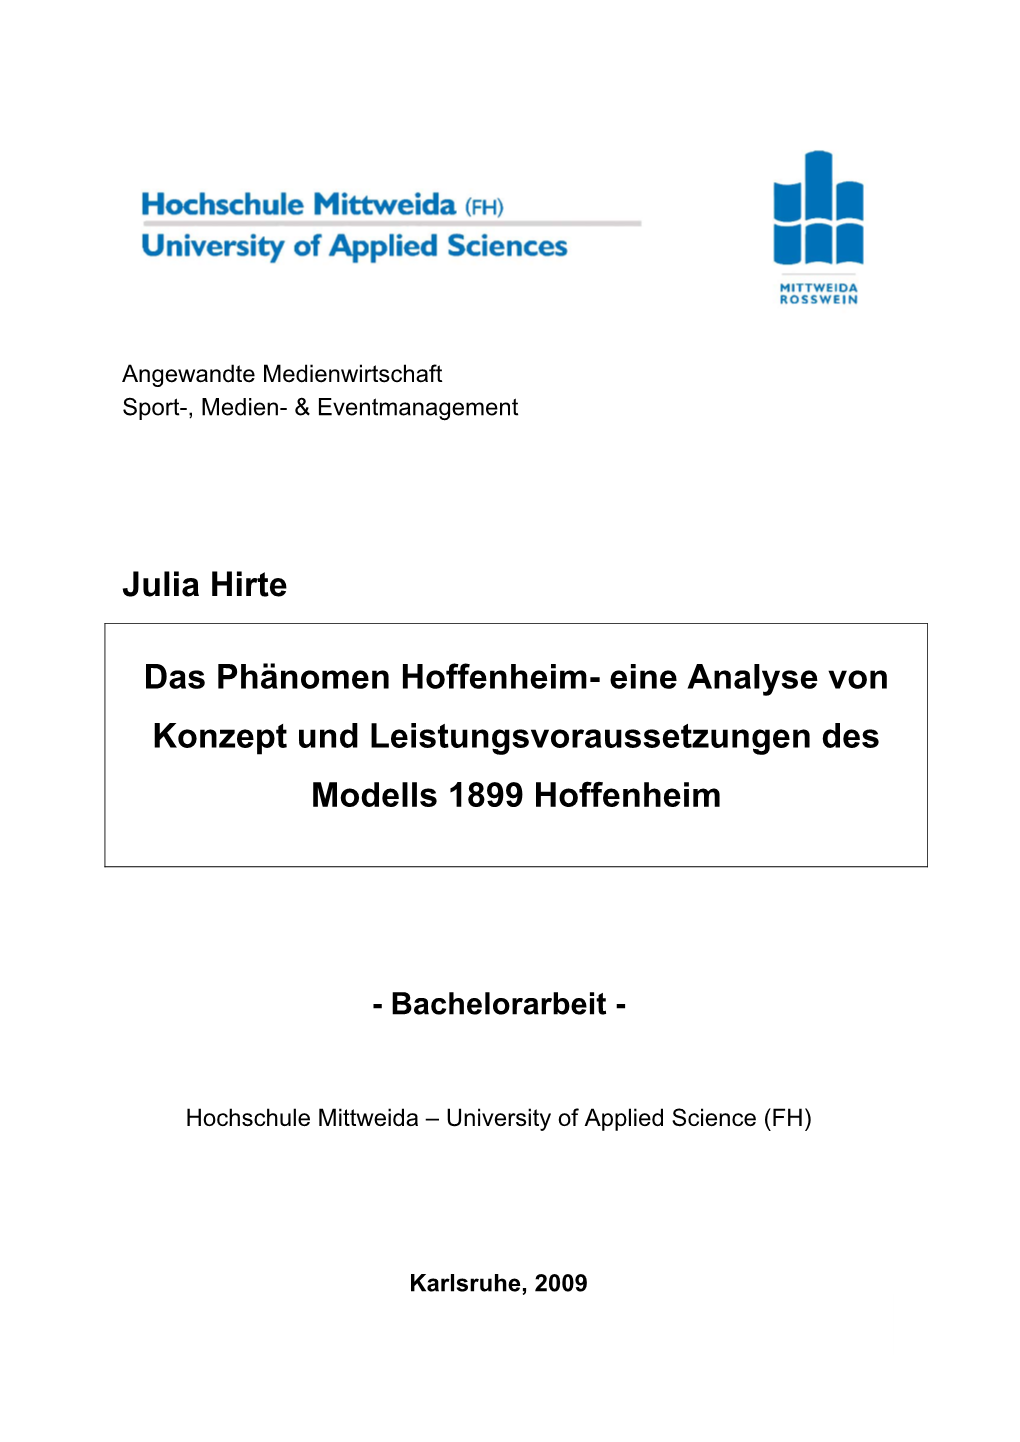 Julia Hirte Das Phänomen Hoffenheim